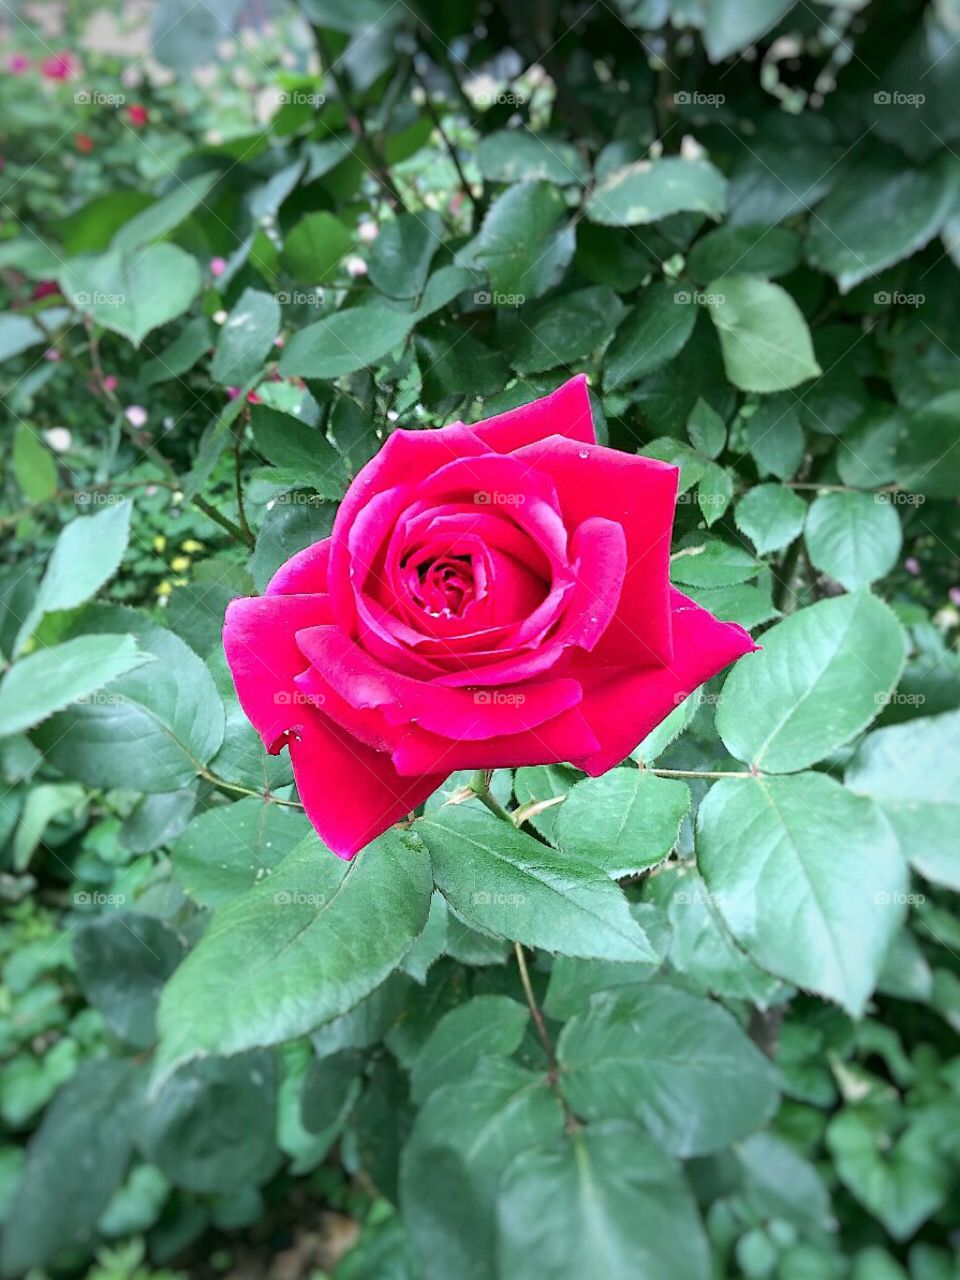 Nature/Landscape/Flowers, Red Rose - Dewitt Clinton Park, Manhattan, New York City. Instagram,@PennyPeronto